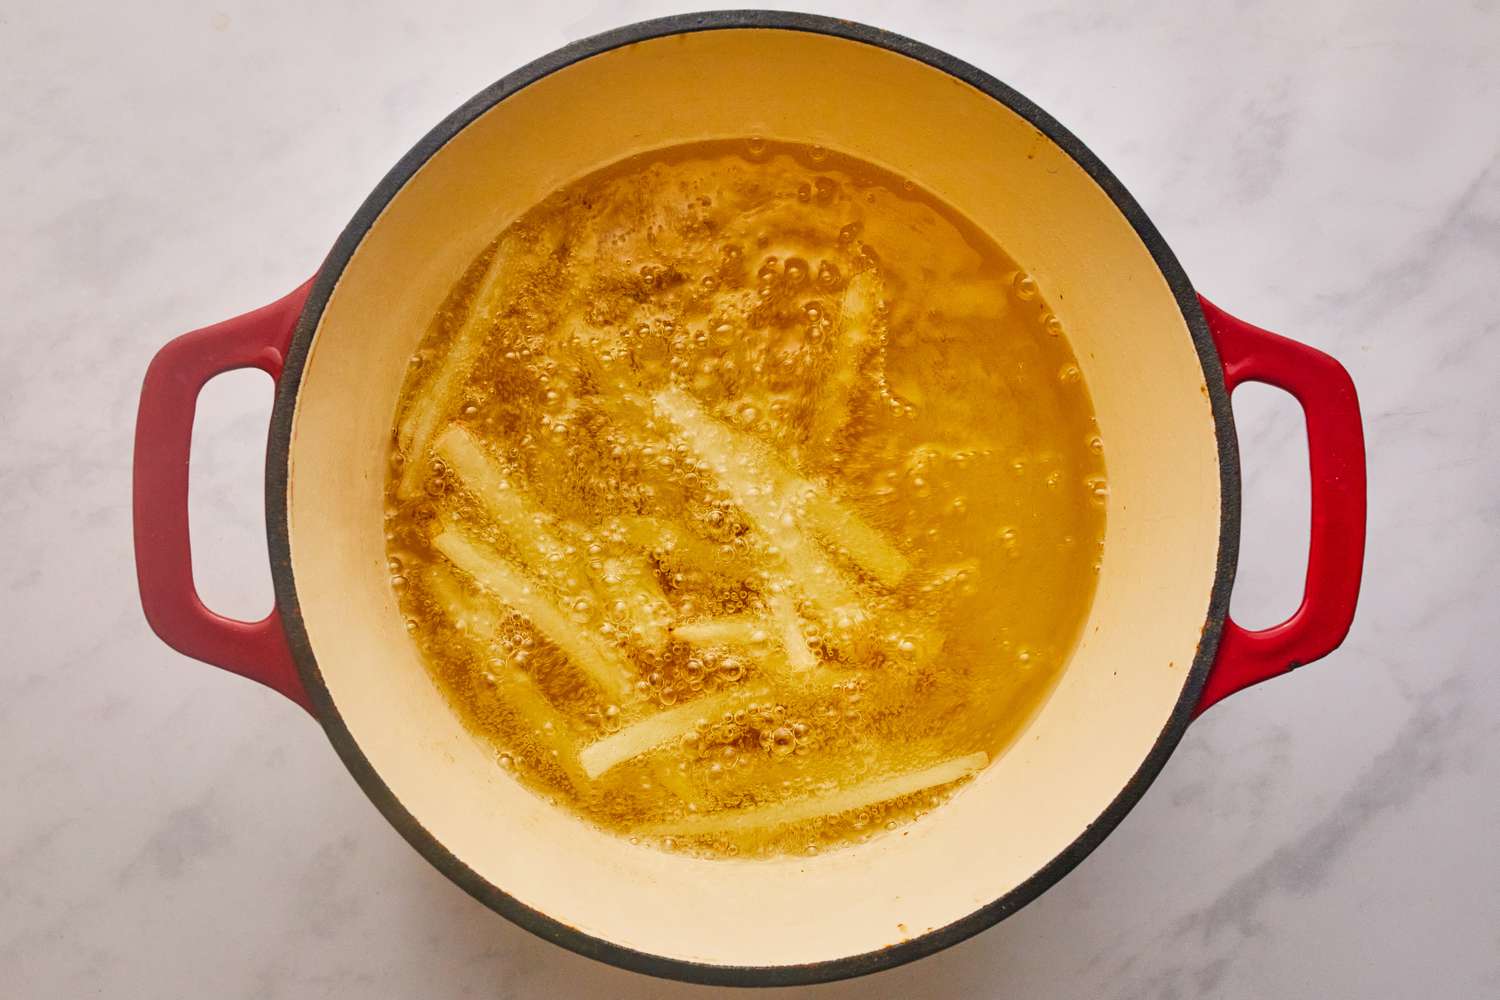 Par-cooking fries in a pot of oil